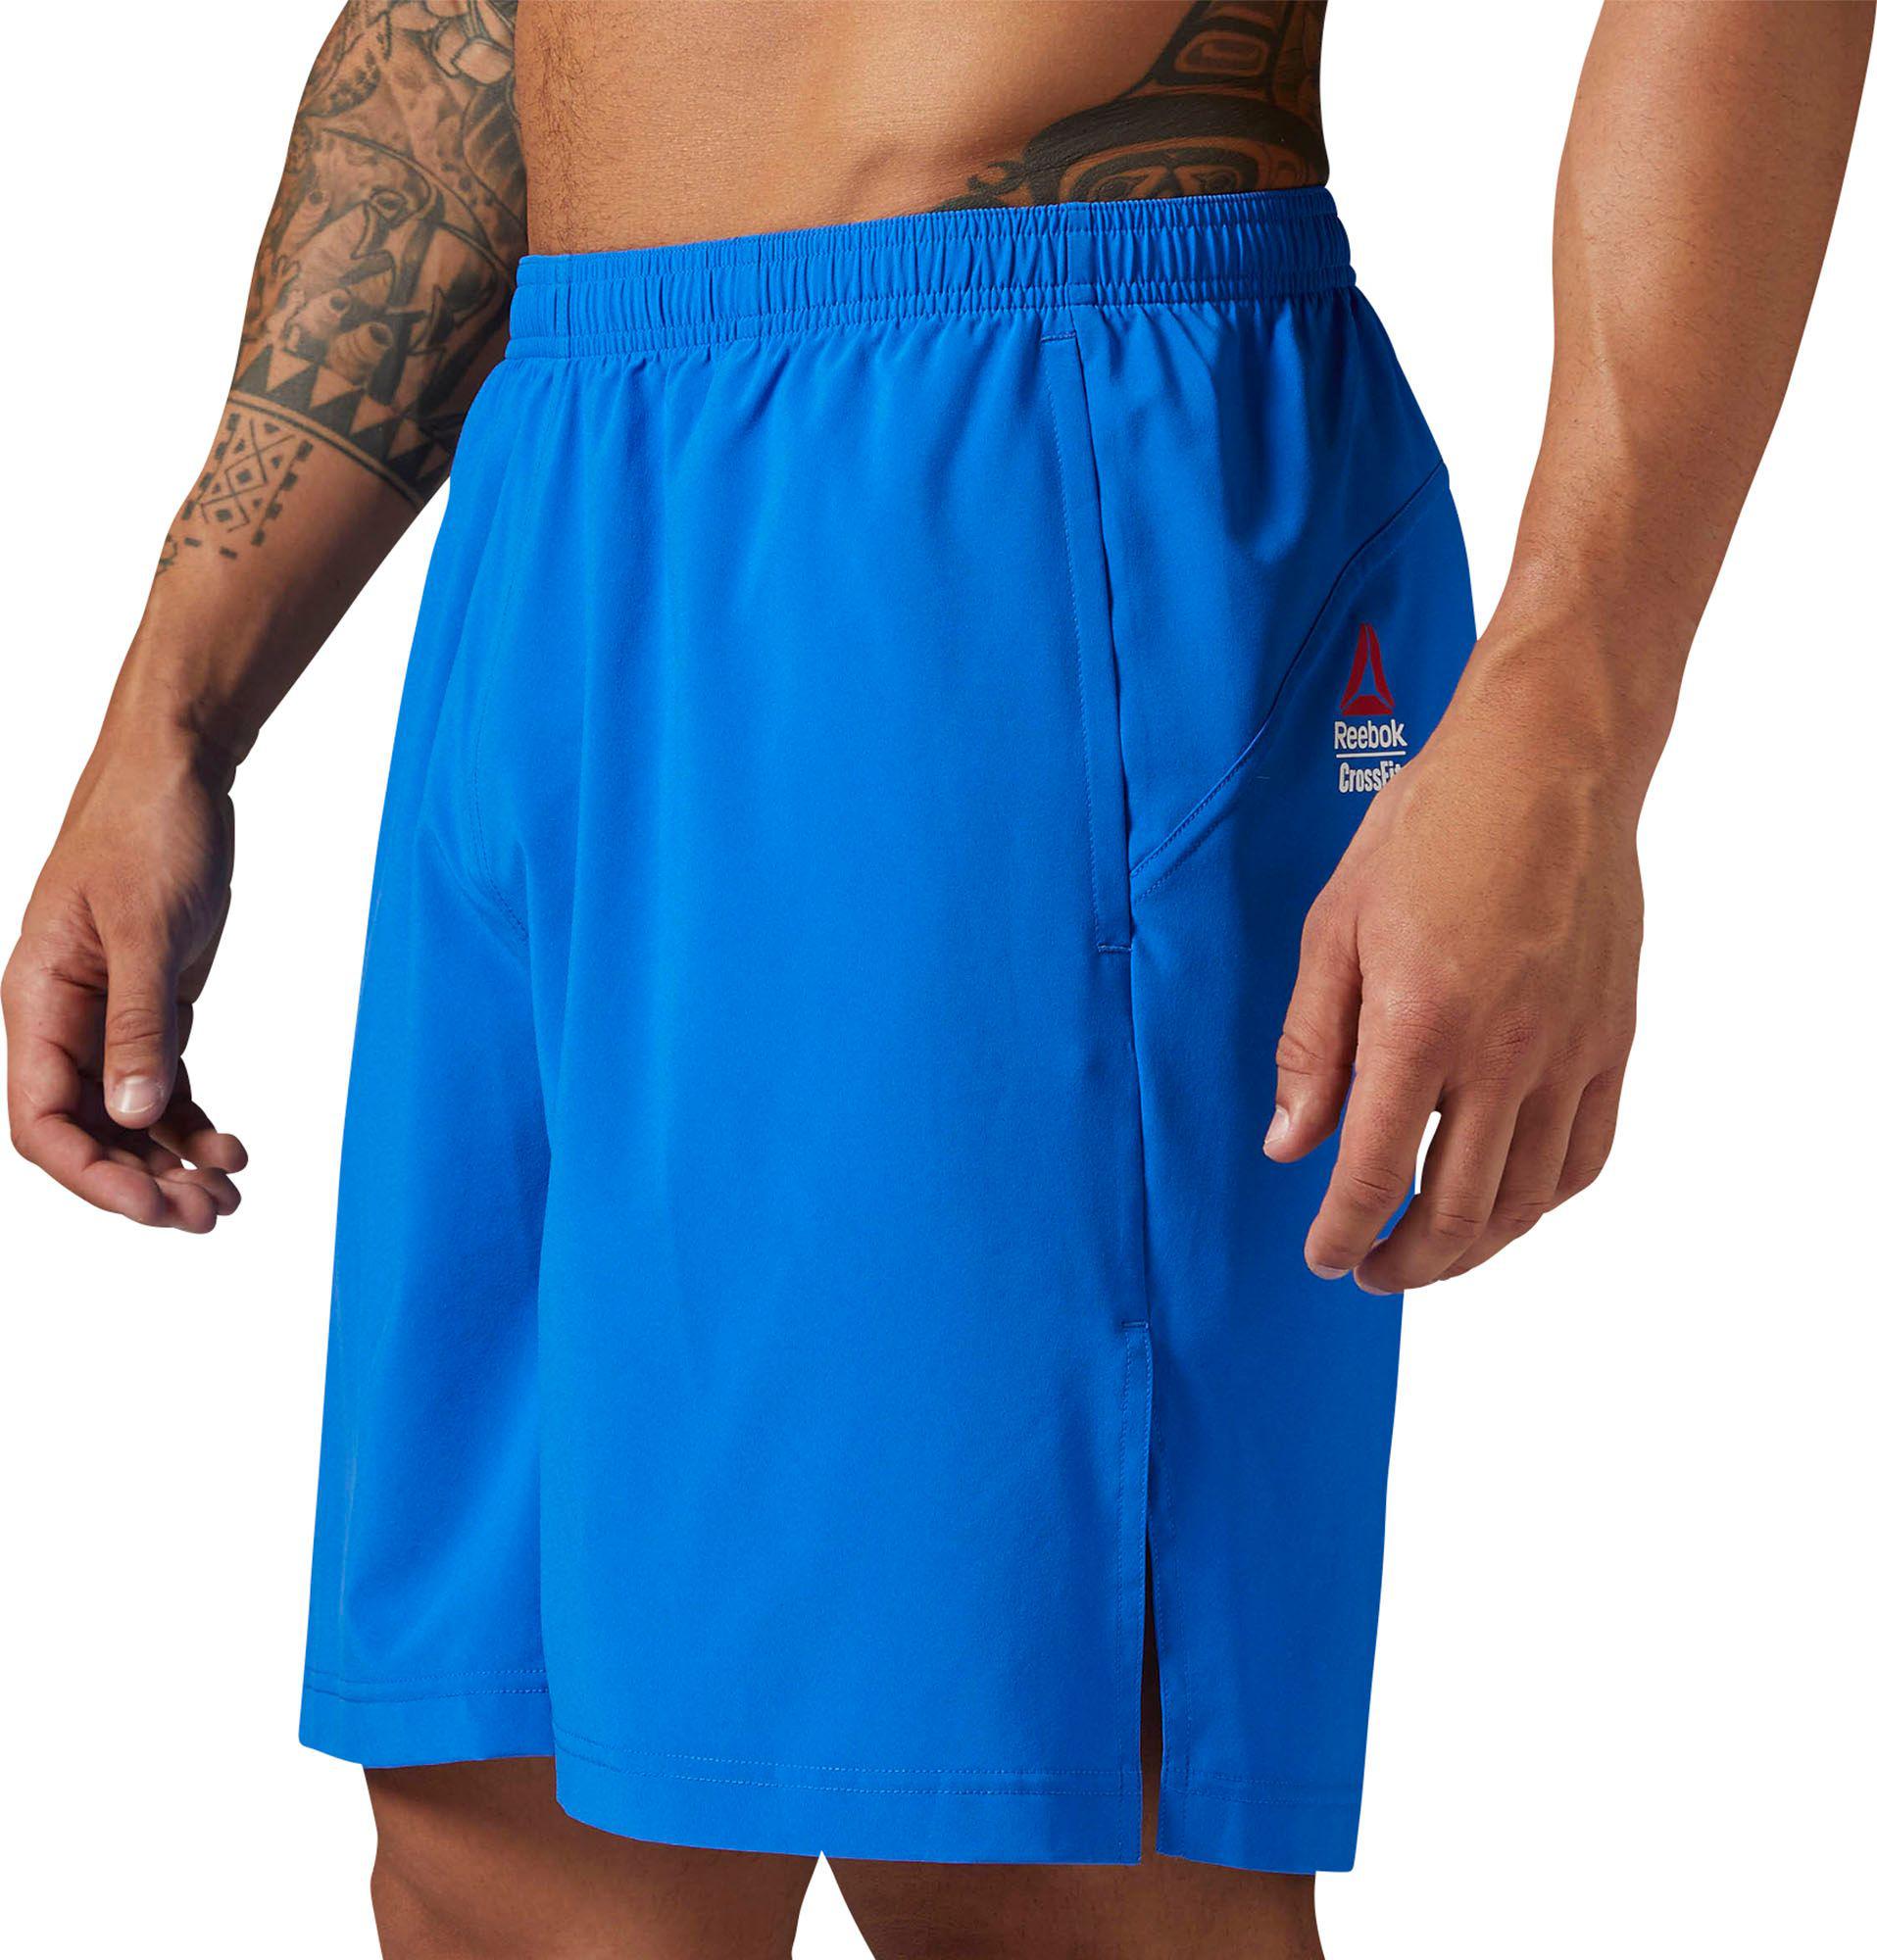 Reebok Synthetic Crossfit Austin 2 Shorts in Blue for Men - Lyst